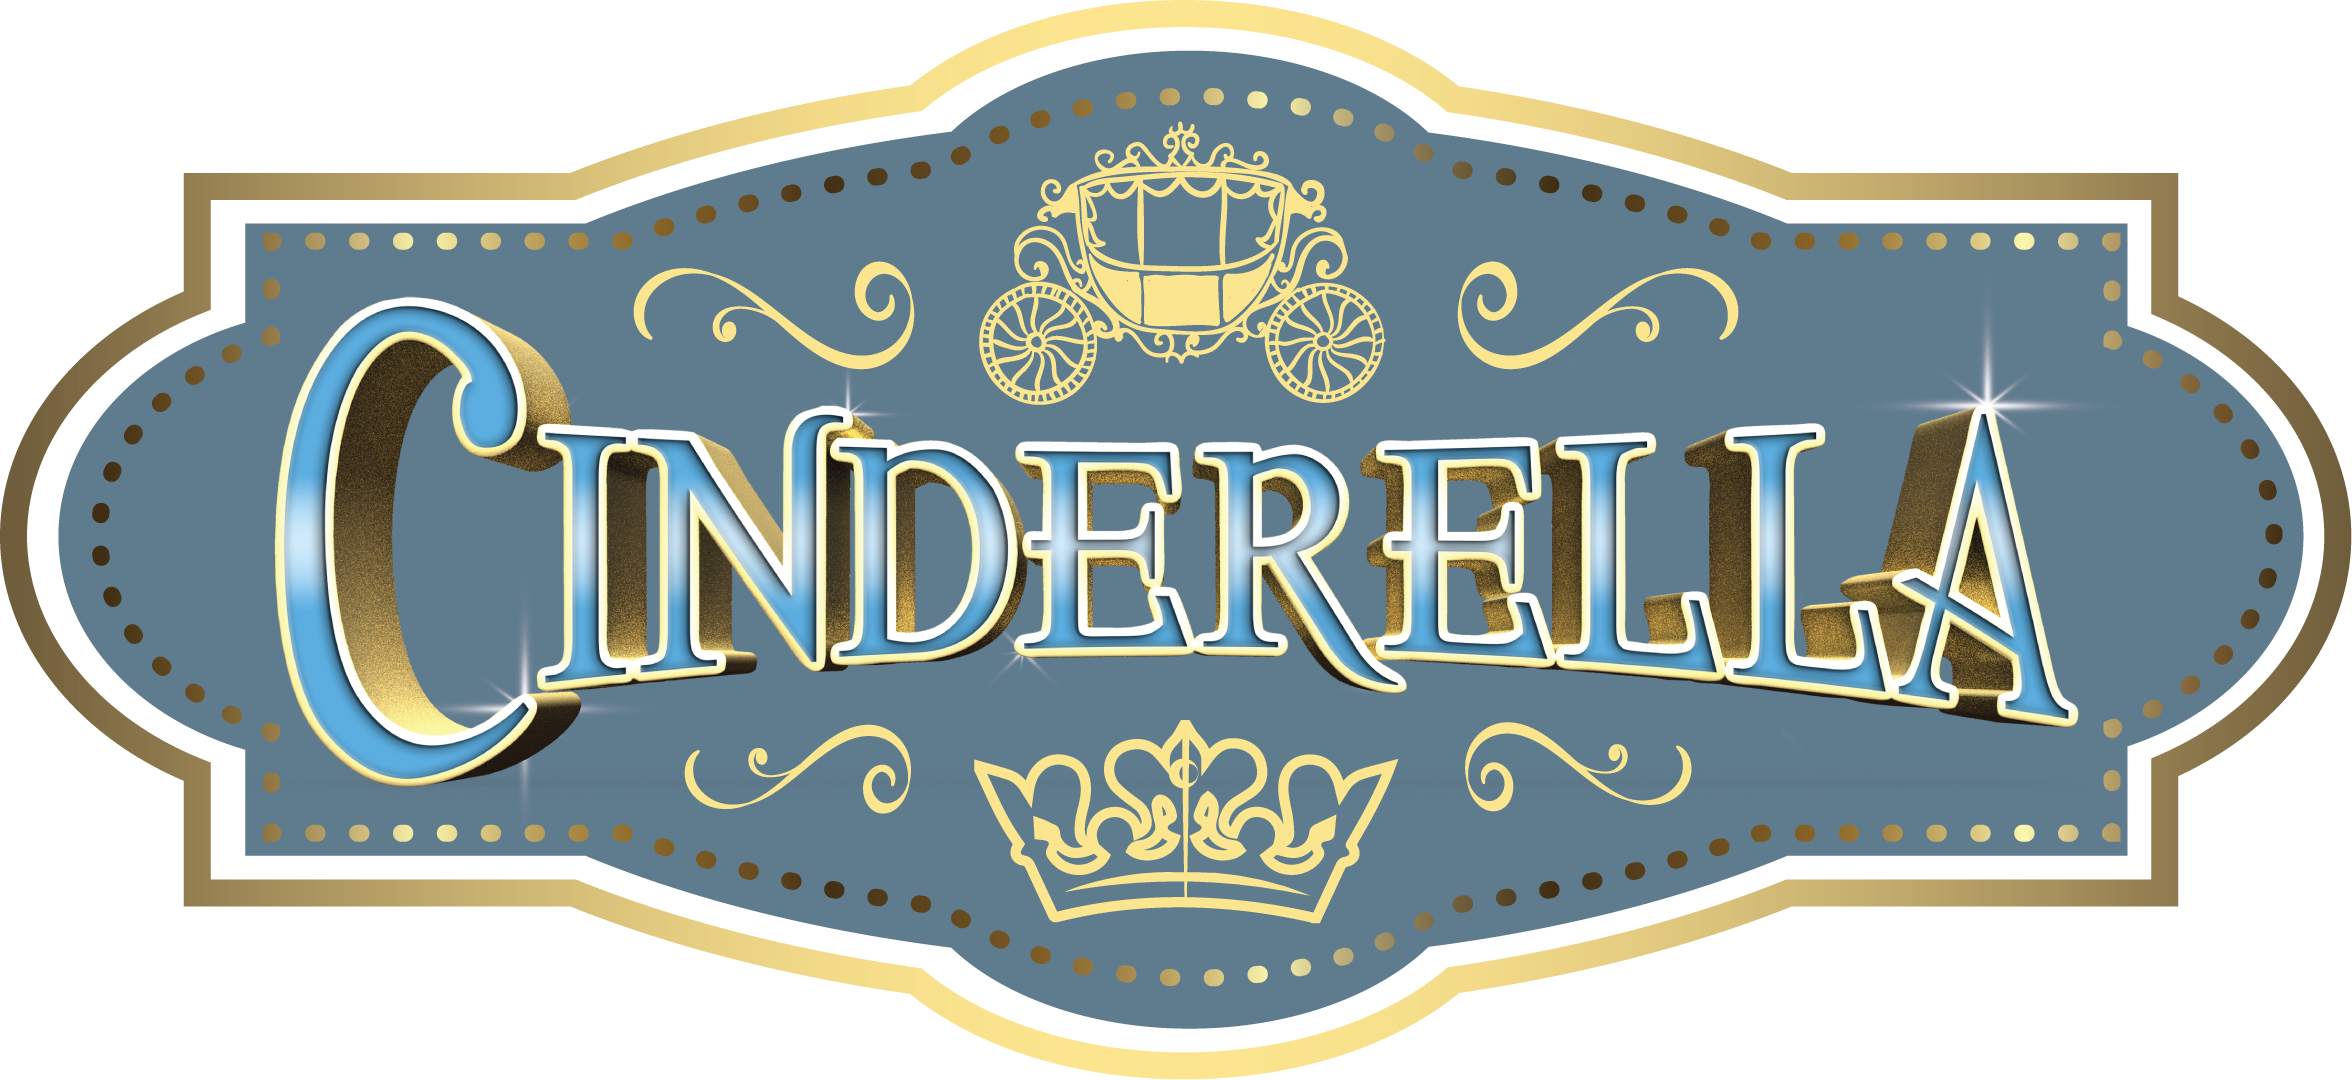 Cinderella Hd PNG Image